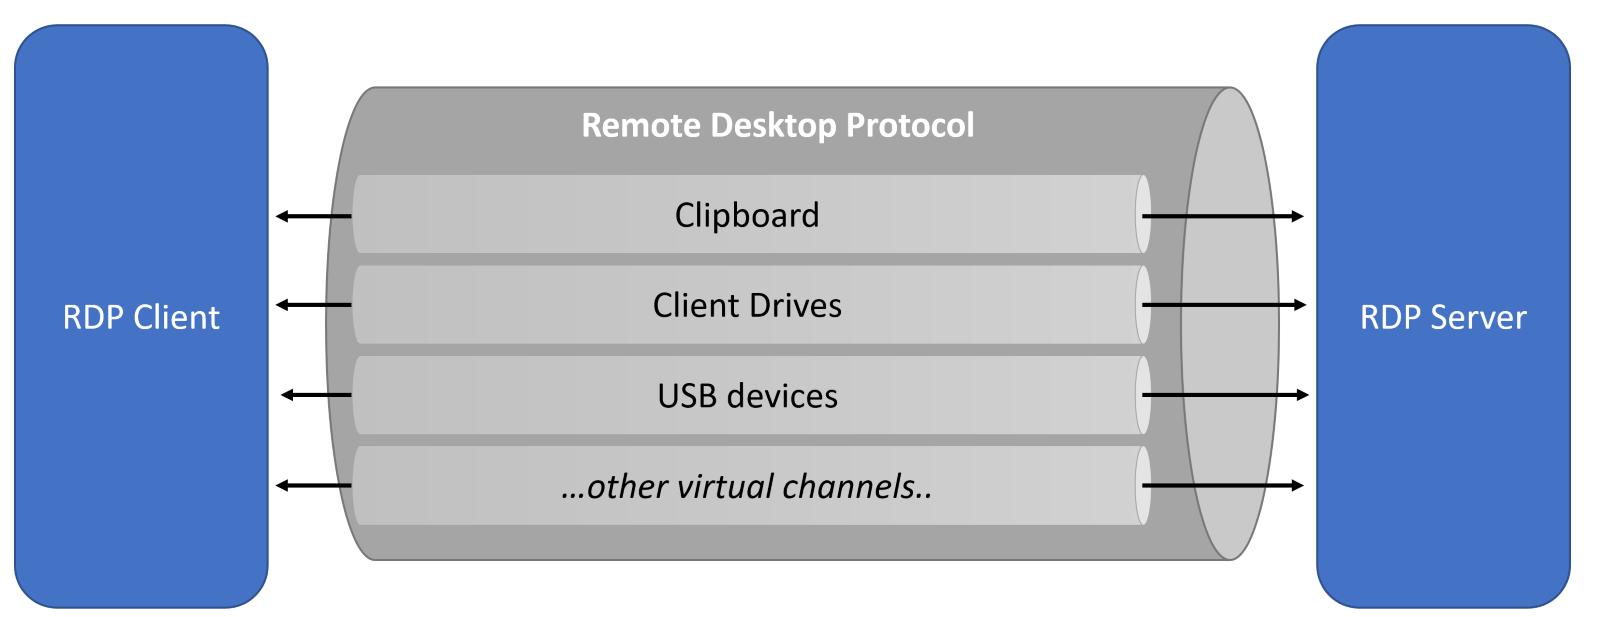 A screenshot of a remote desktop protocol

Description automatically generated with medium confidence